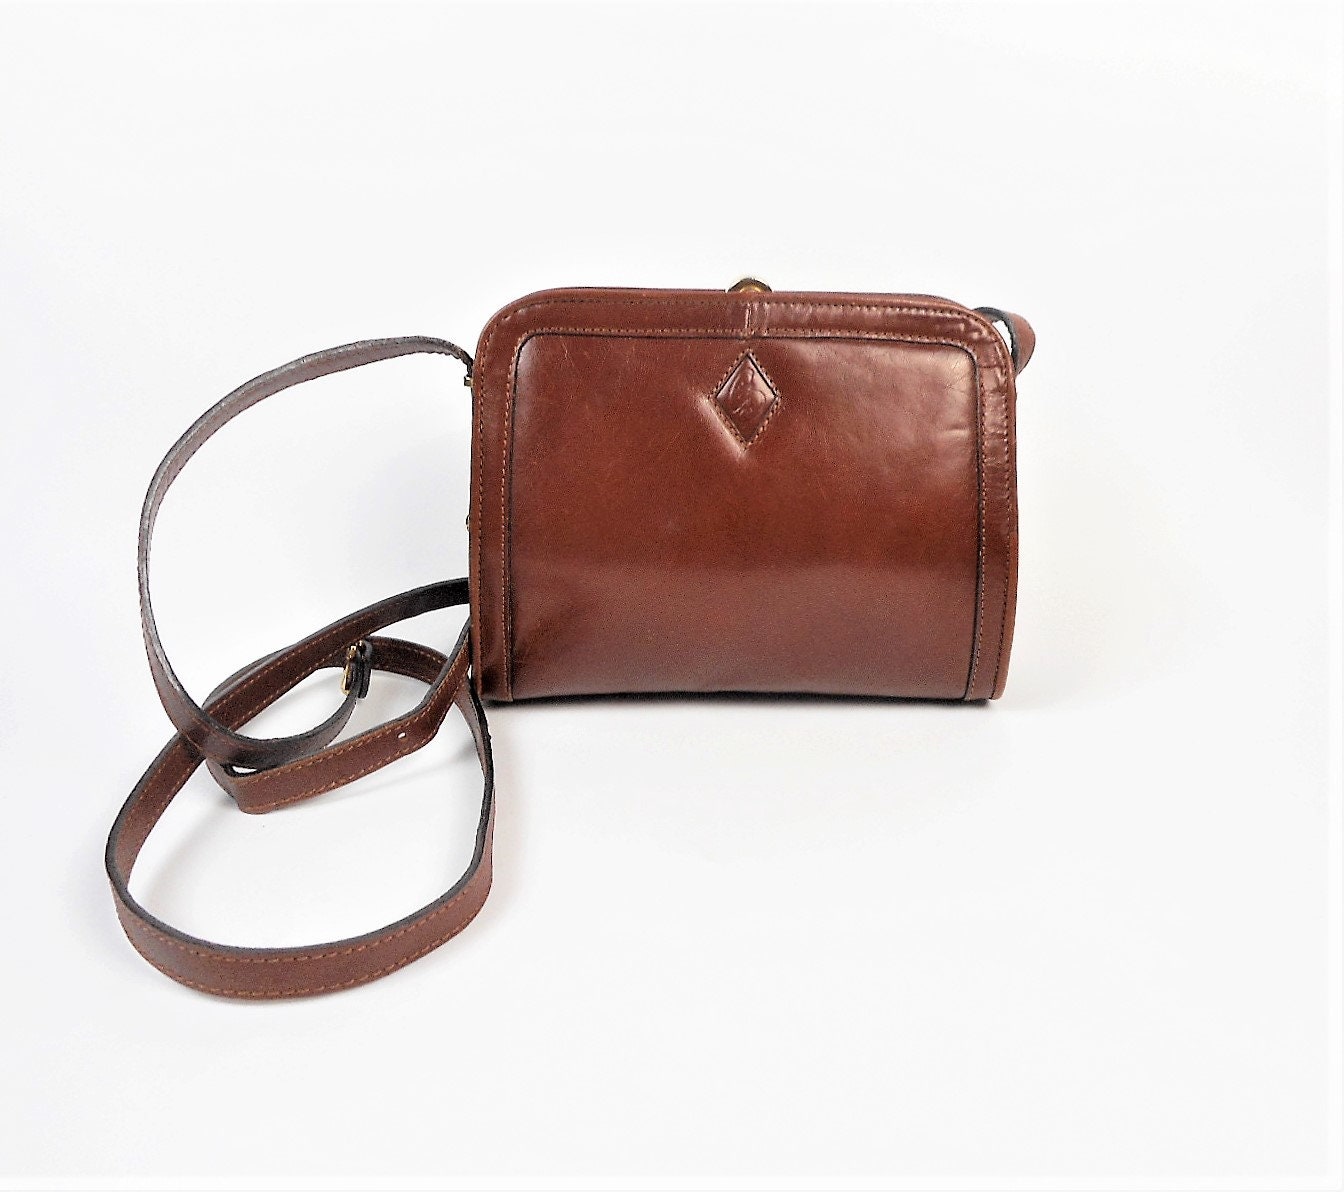 Vera Pelle Made in Italy Bag, Tan Saffiano Leather Handbag, Top